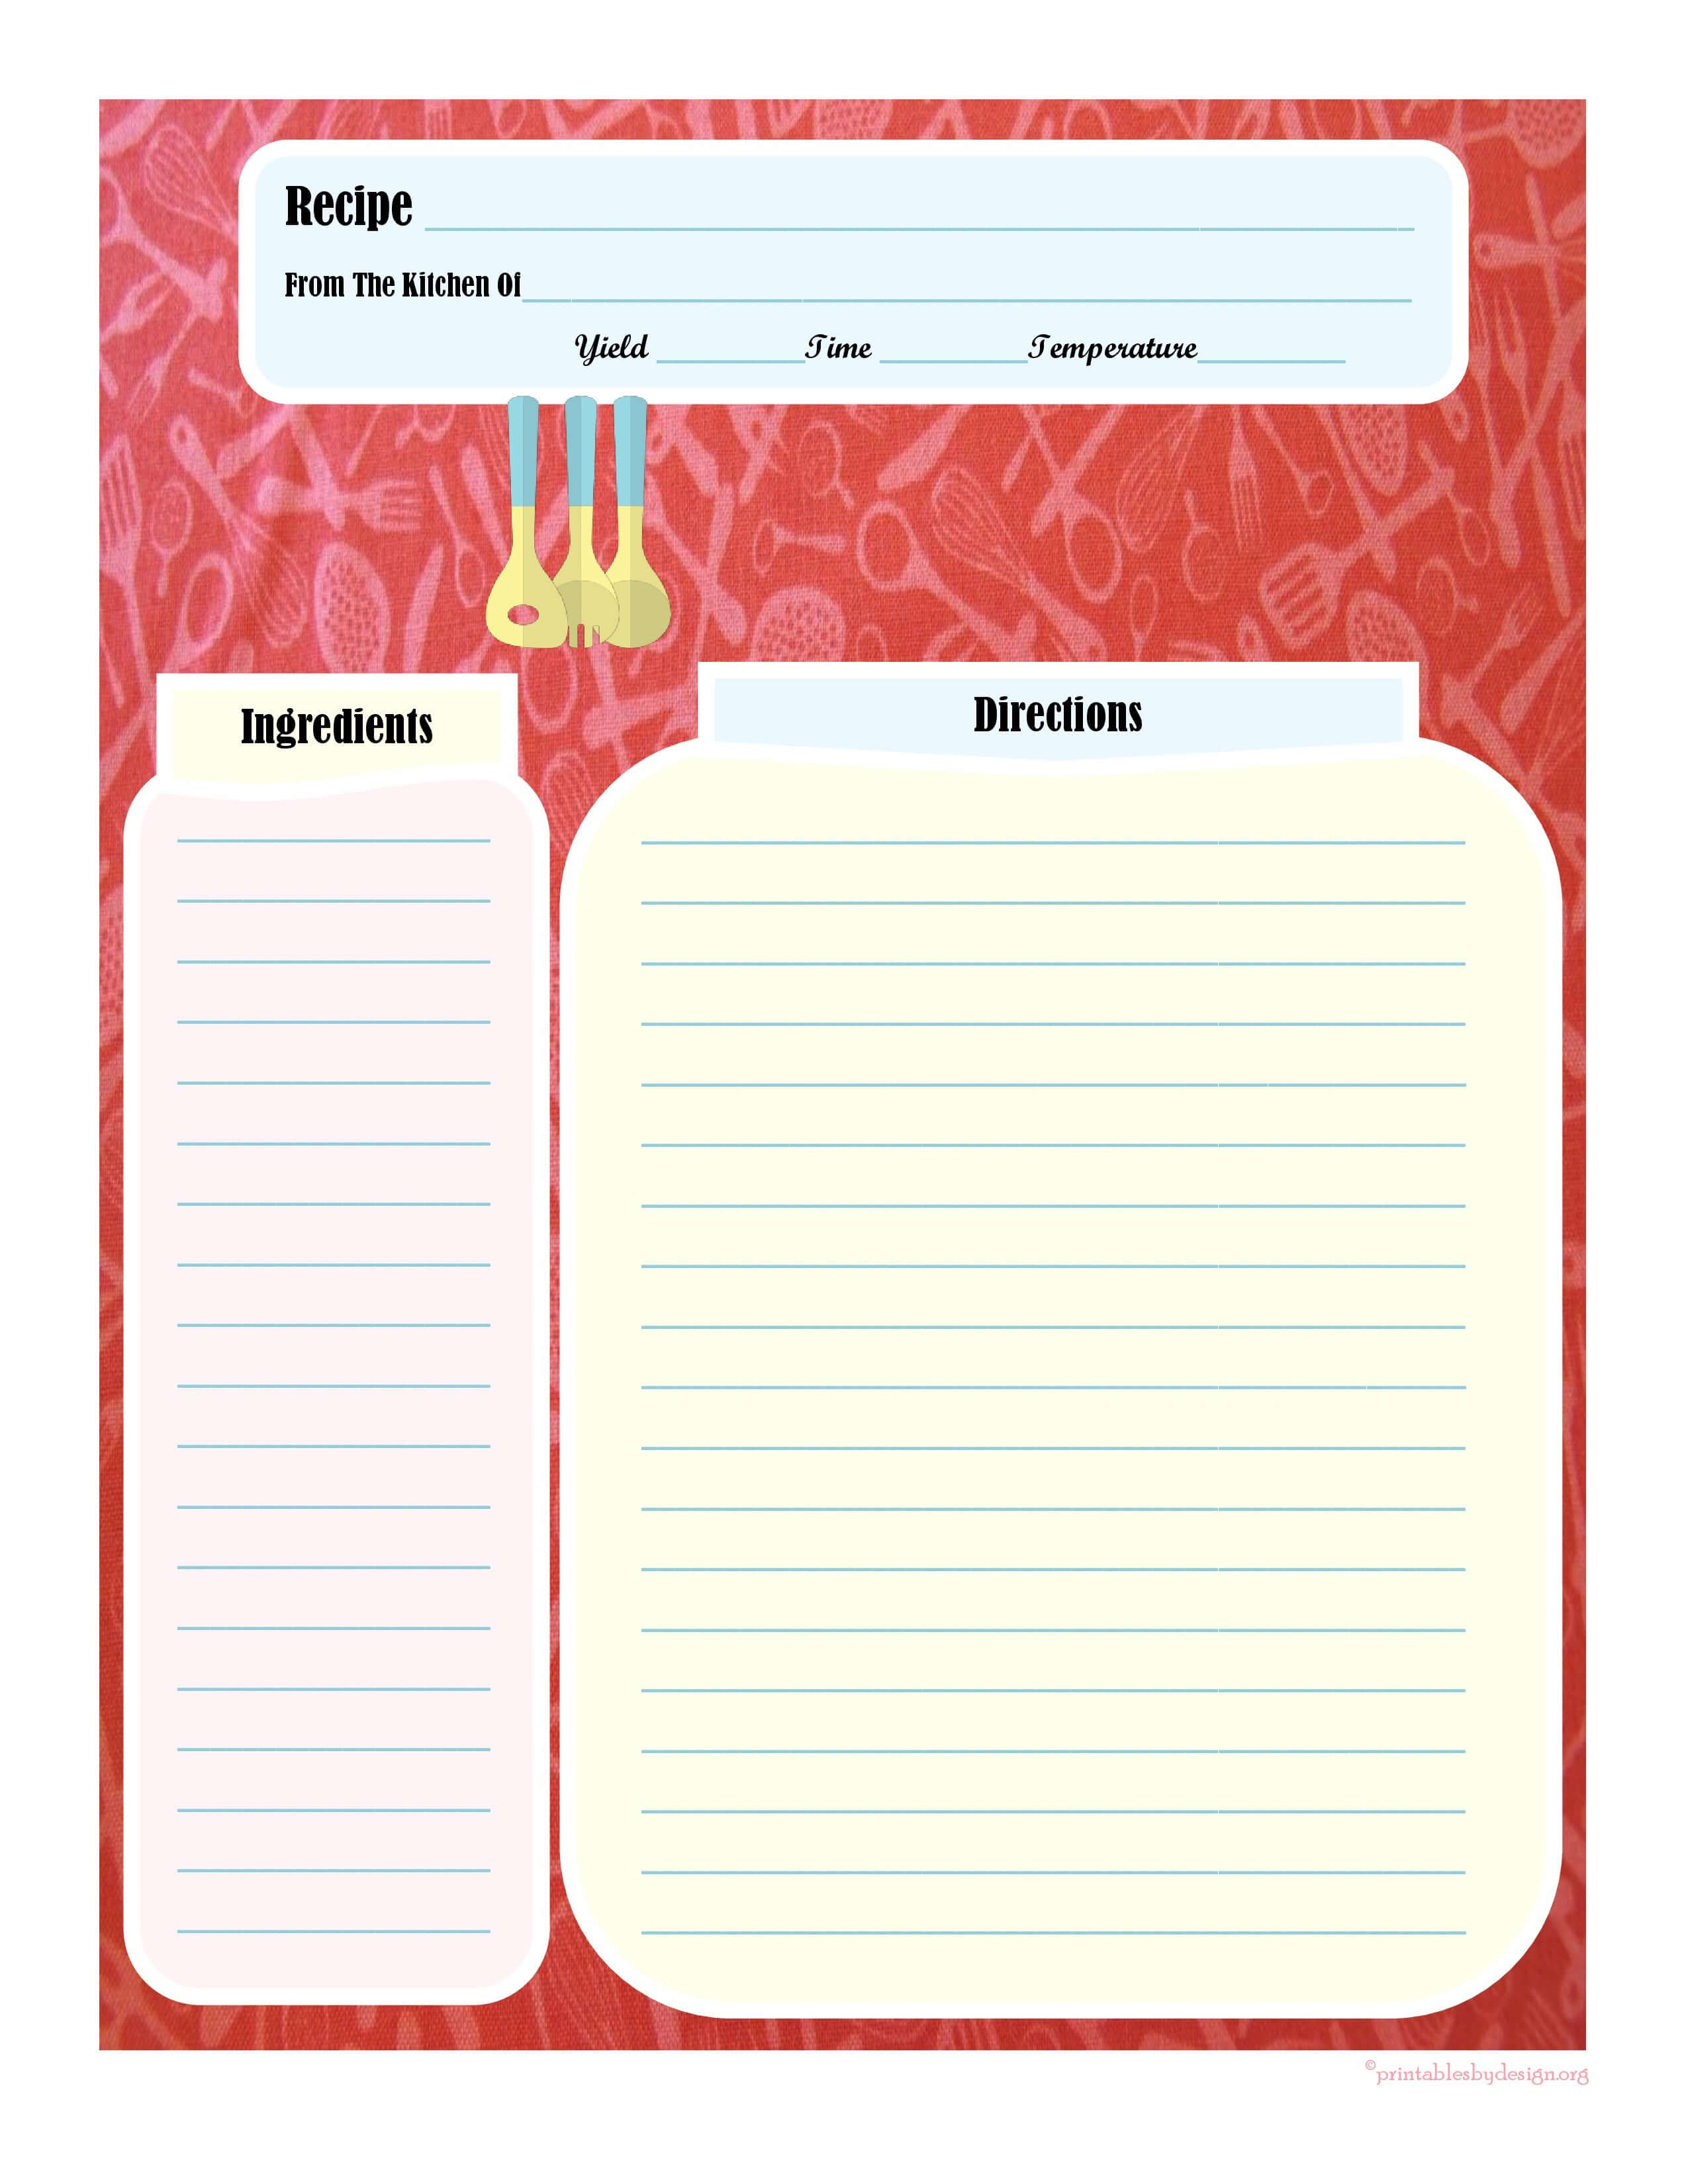 Full Page Recipe Card | Printable Recipe Cards, Cookbook Inside Recipe Card Design Template